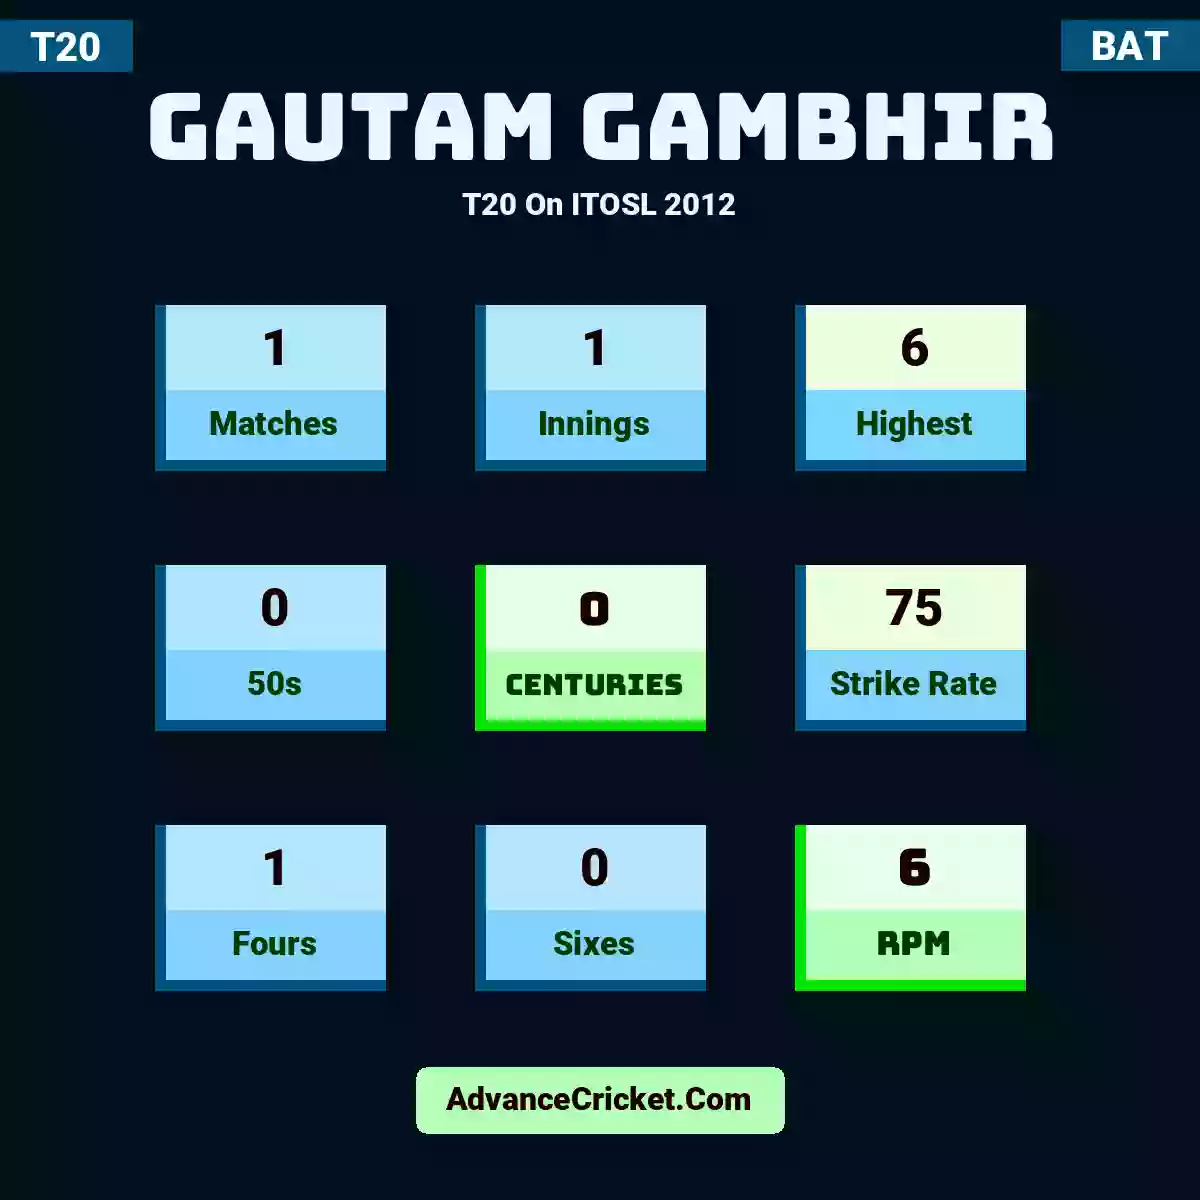 Gautam Gambhir T20  On ITOSL 2012, Gautam Gambhir played 1 matches, scored 6 runs as highest, 0 half-centuries, and 0 centuries, with a strike rate of 75. G.Gambhir hit 1 fours and 0 sixes, with an RPM of 6.